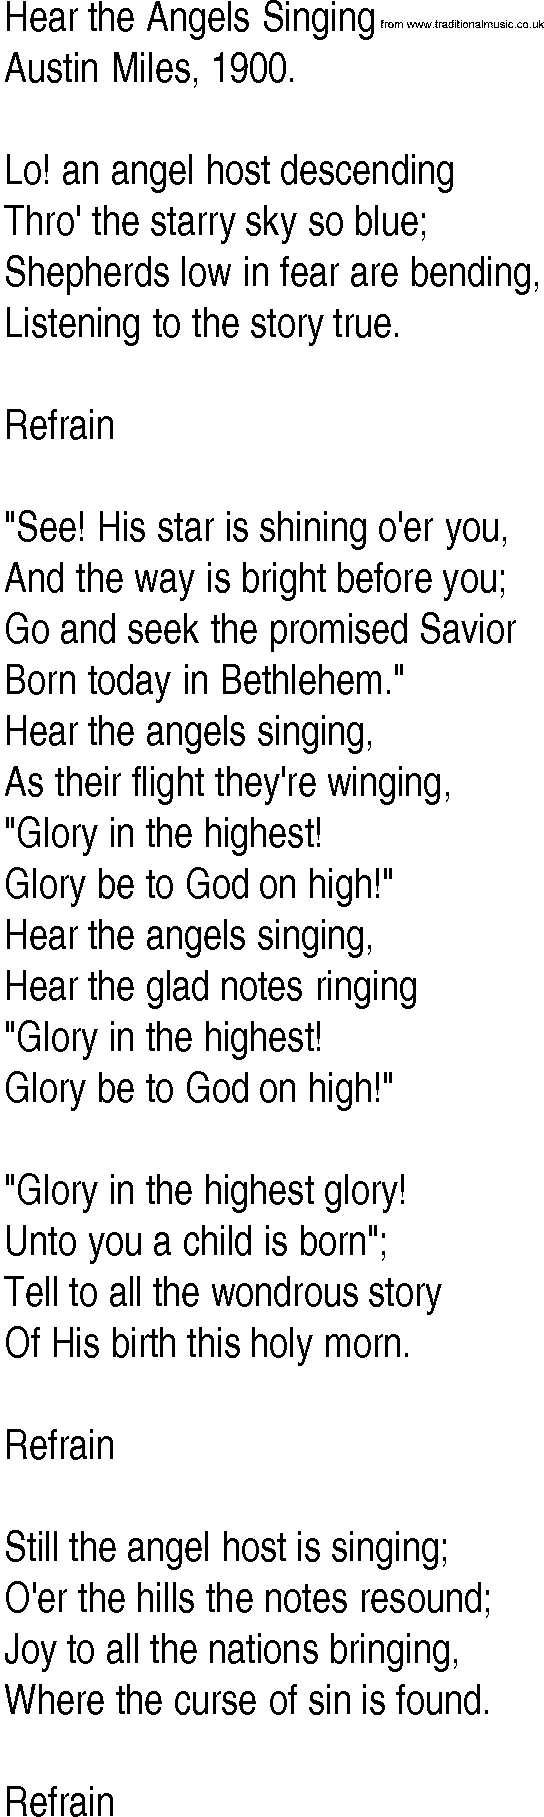 Hymn and Gospel Song: Hear the Angels Singing by Austin Miles lyrics